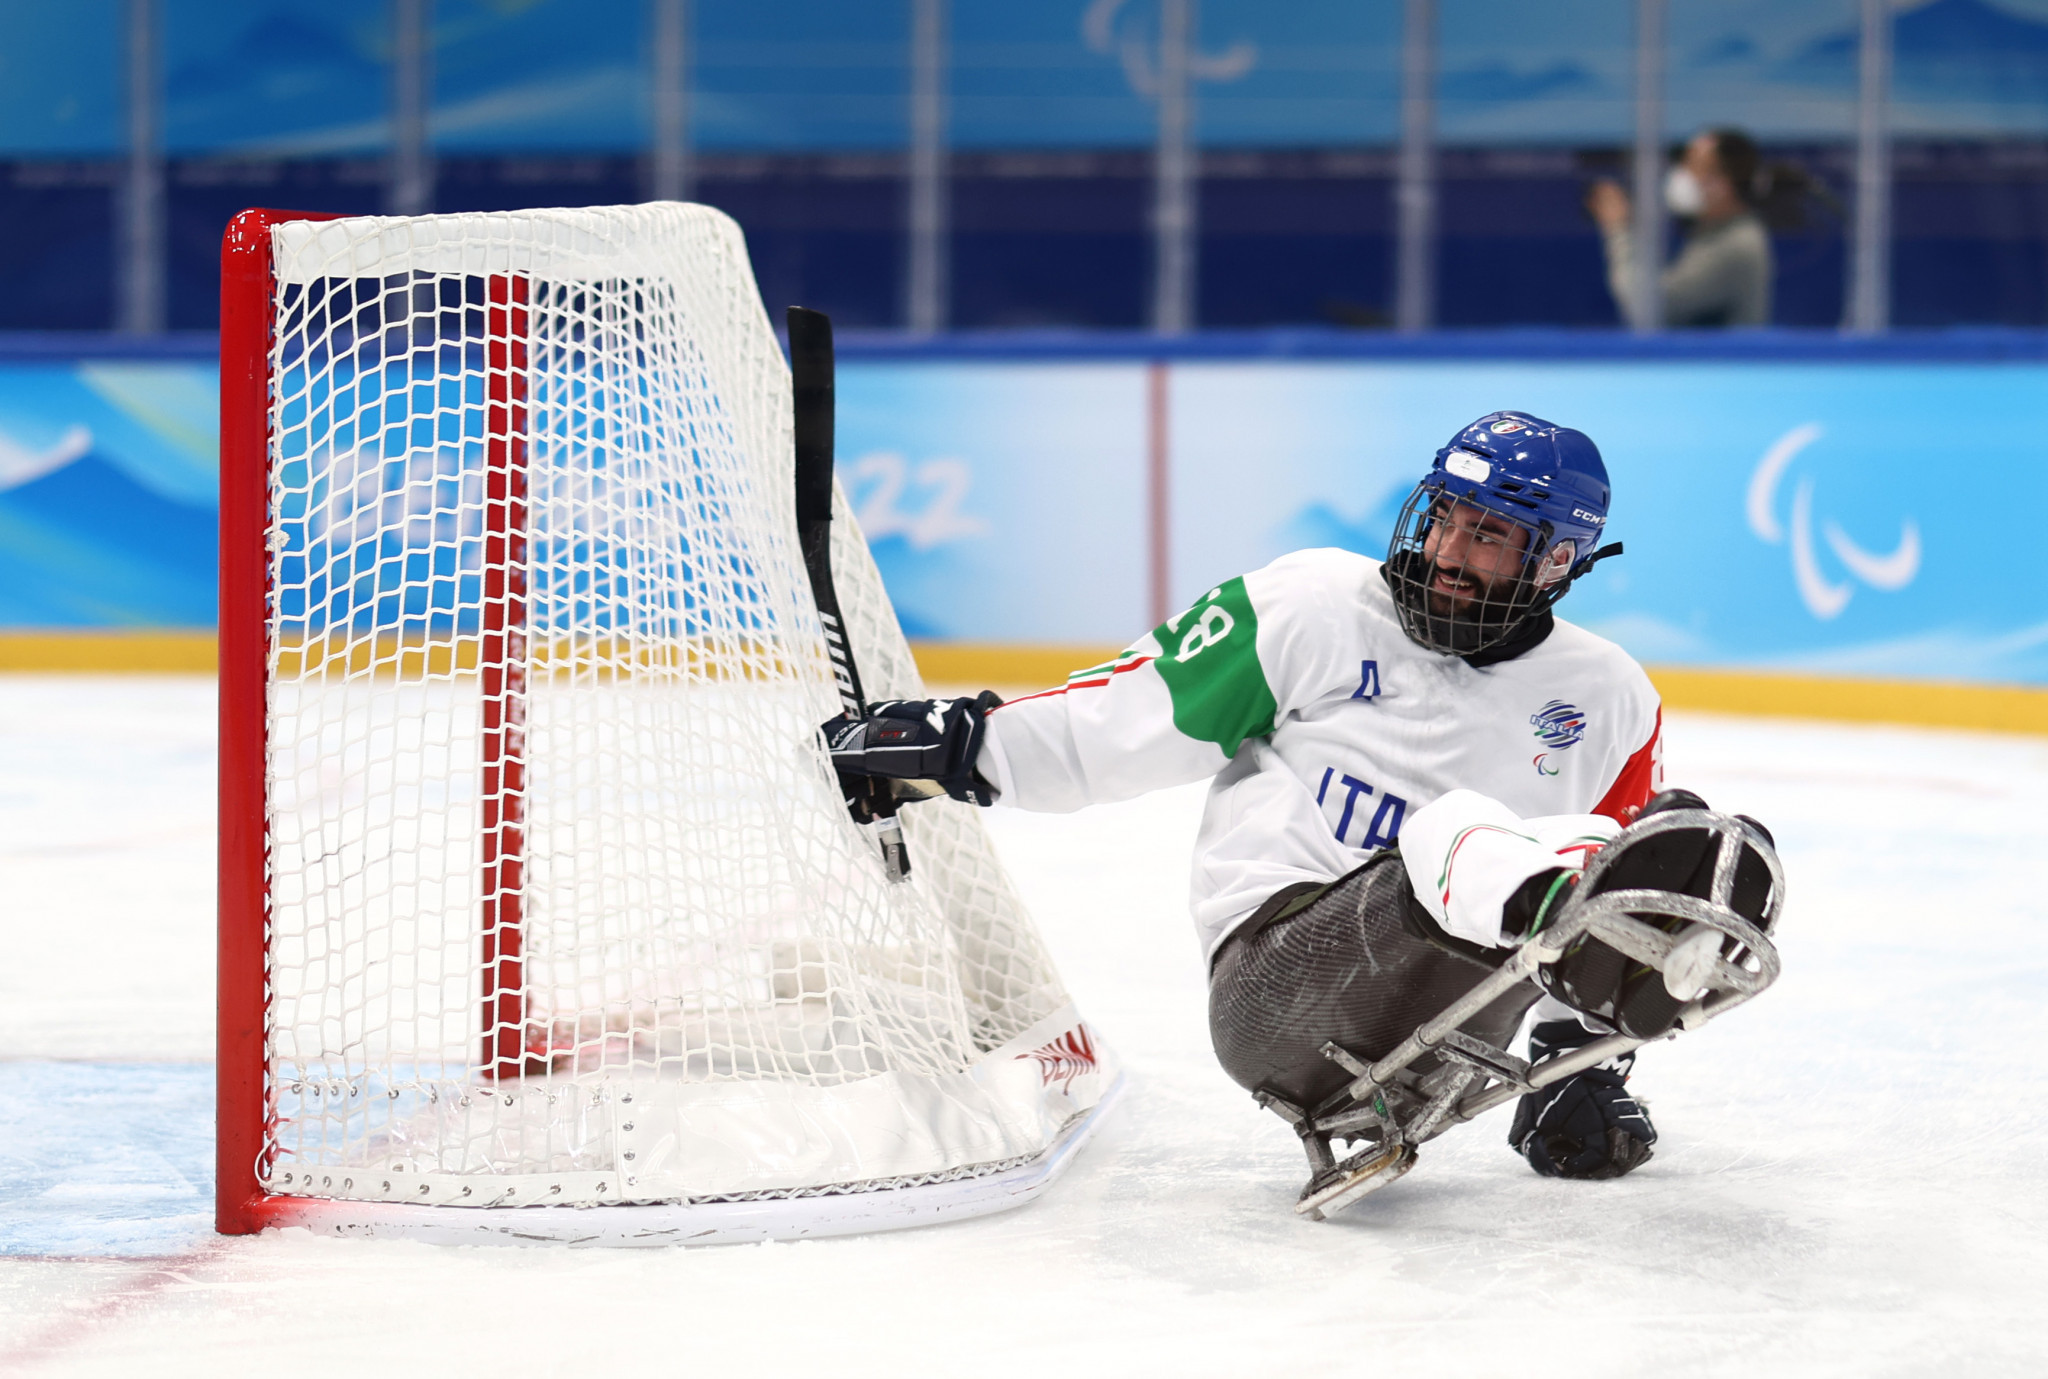 Italian Para ice hockey athlete Andrea Macri will be present at the gathering ©Getty Images